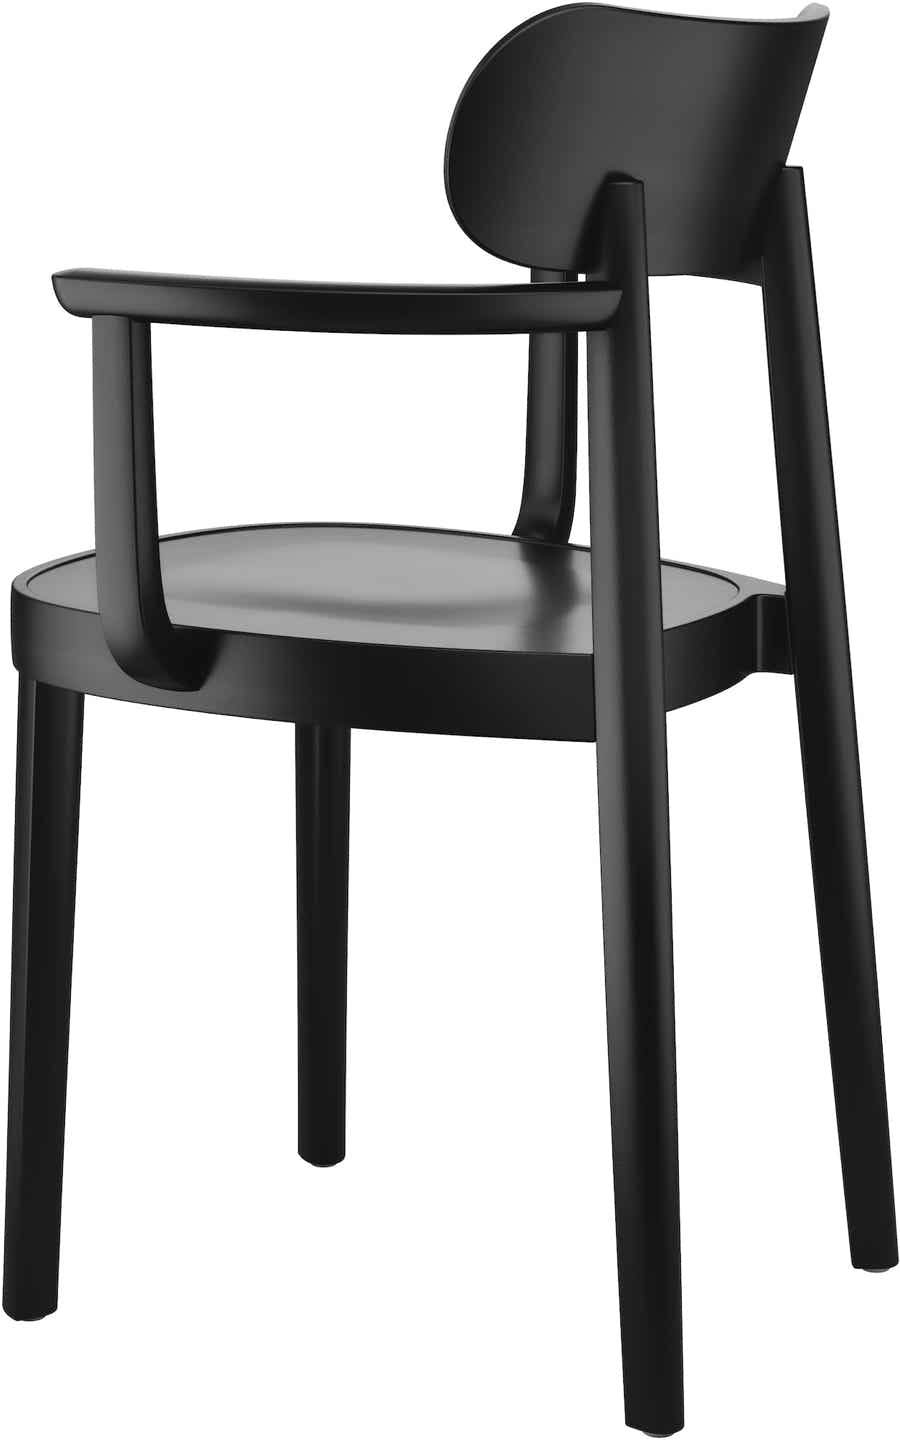 118 M / 118 MF Chair Black